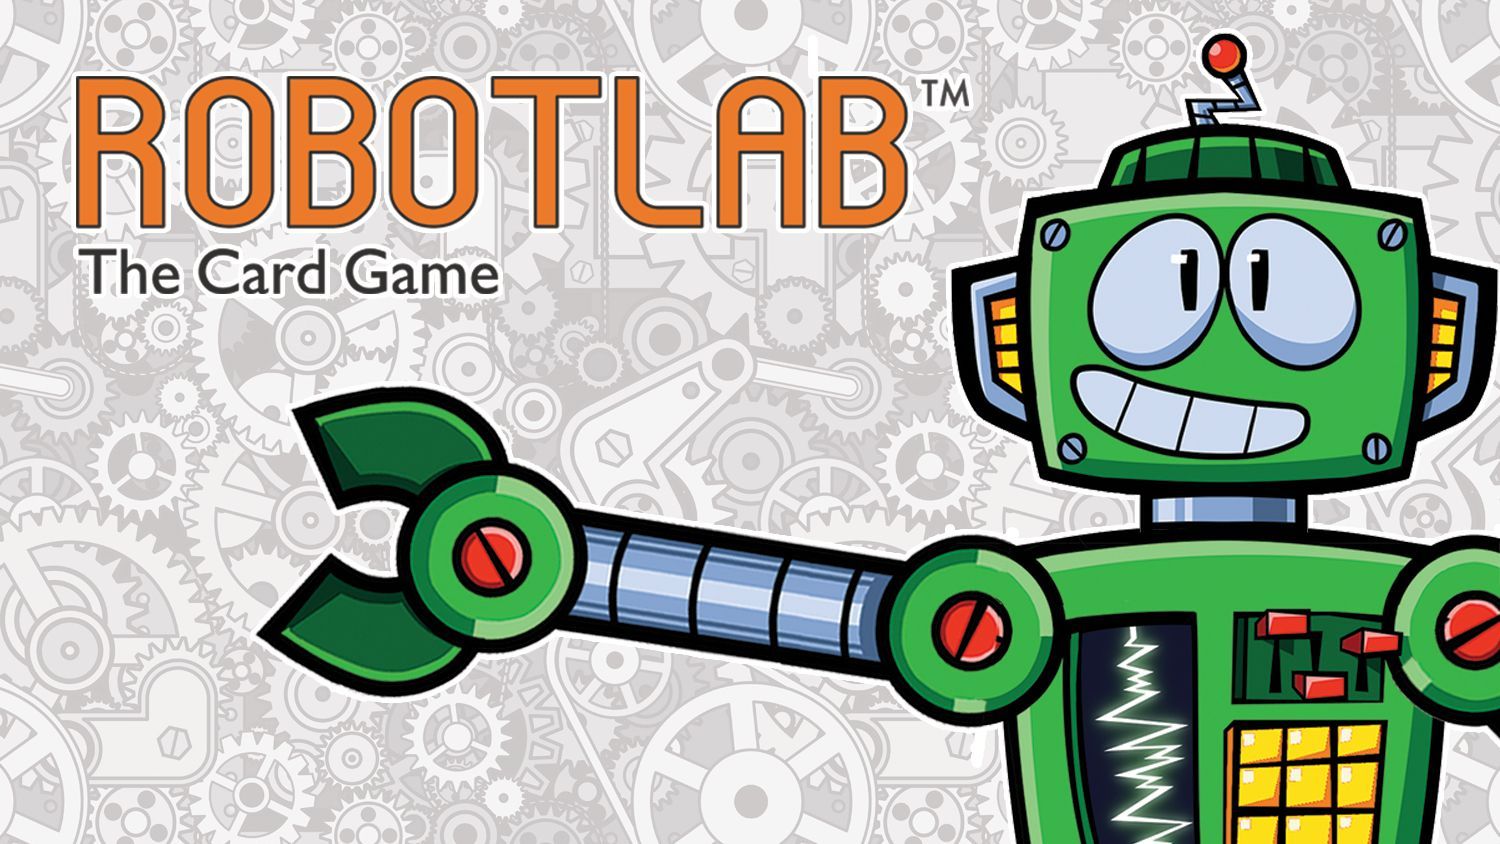 RobotLab: The Card Game